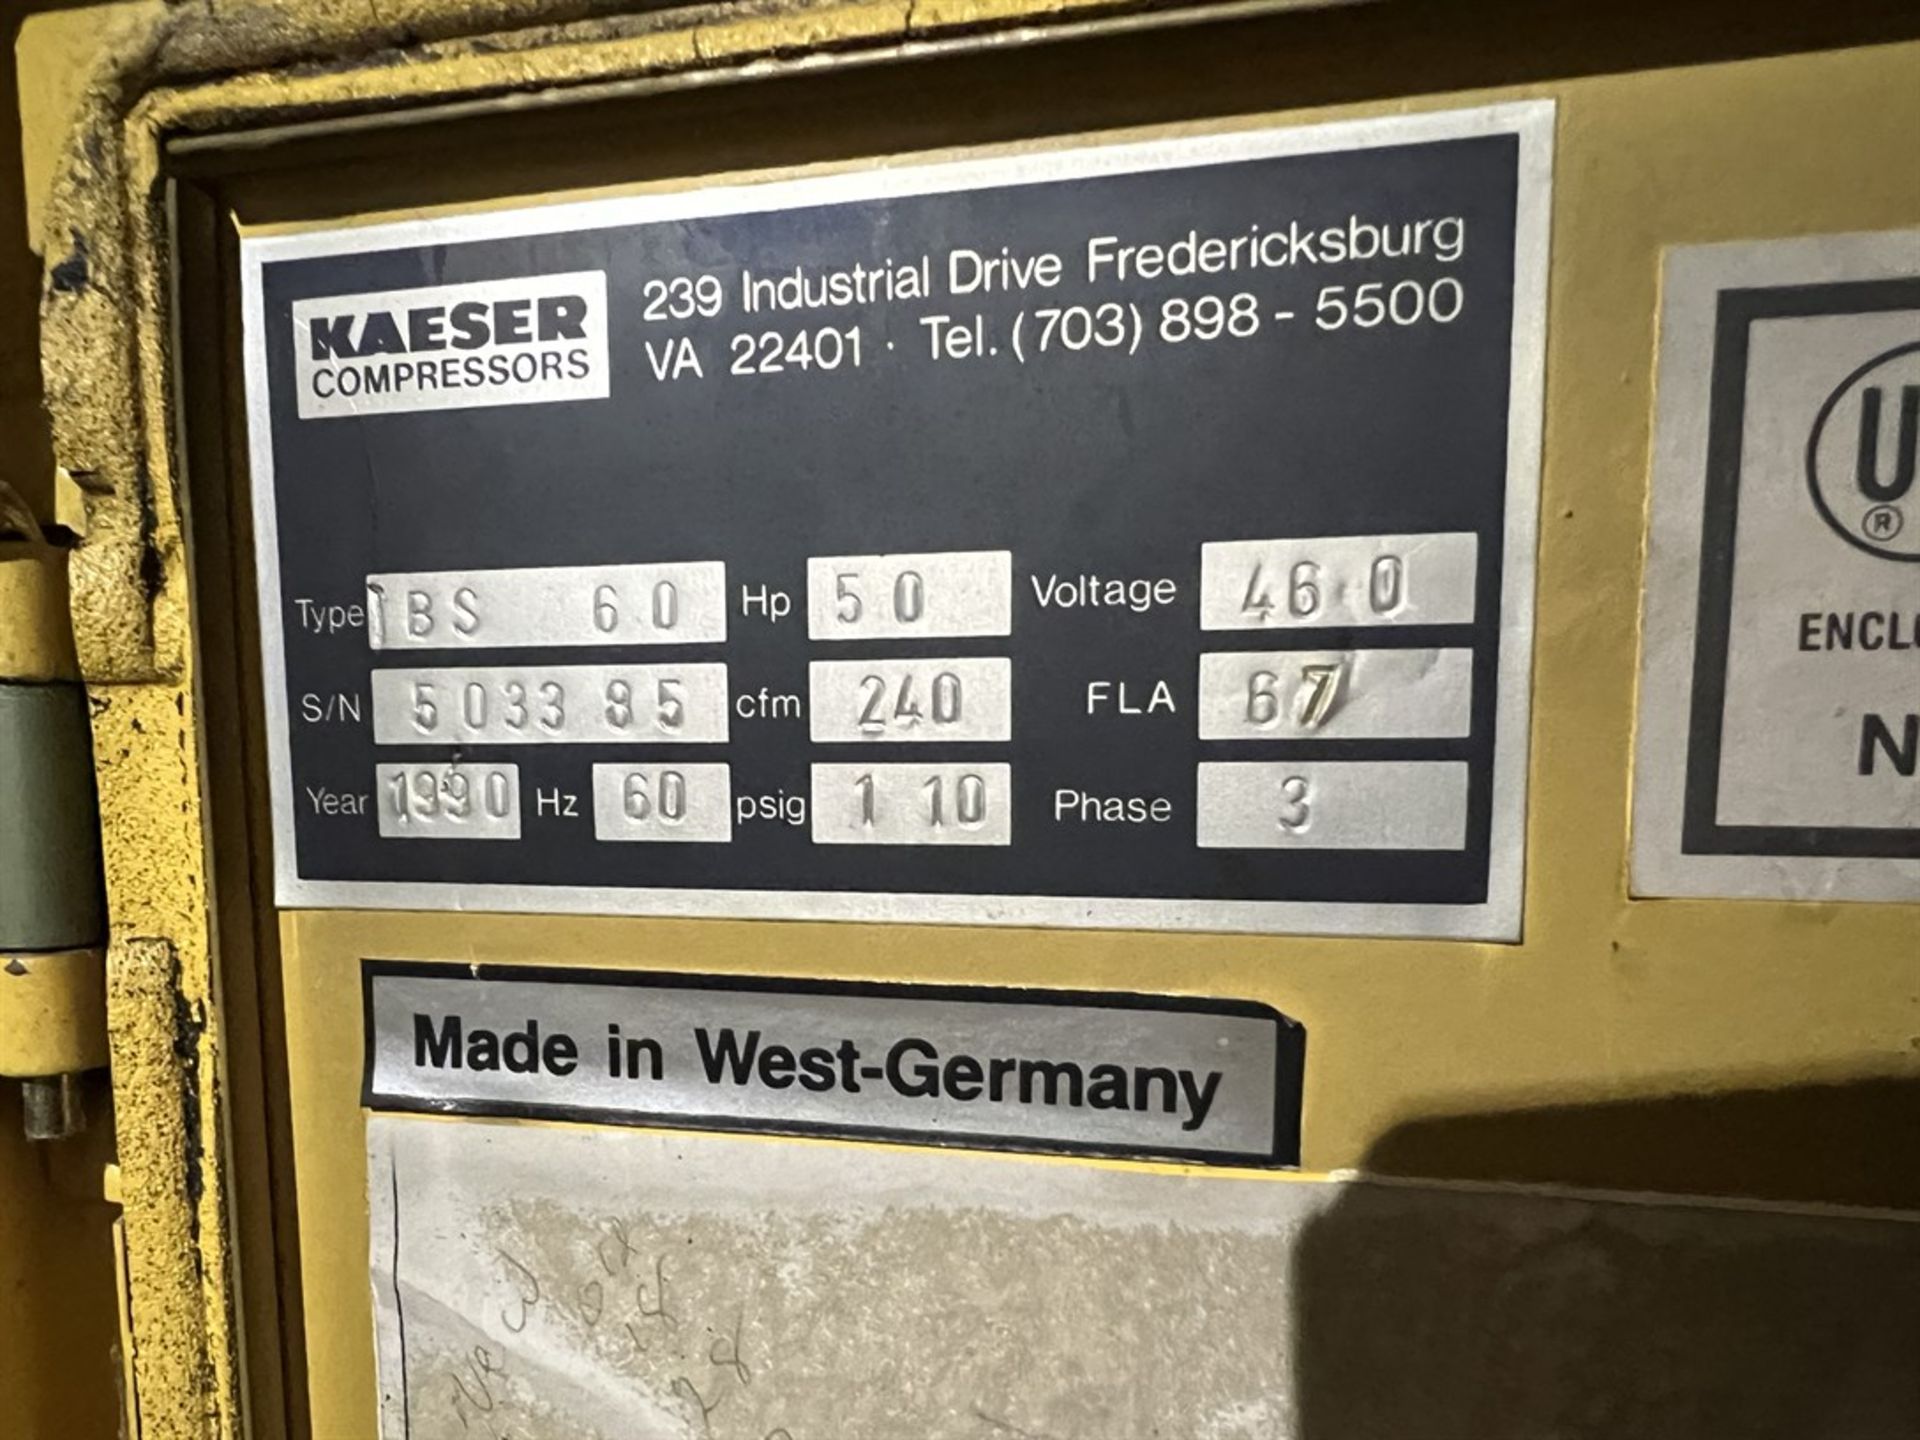 KAESER BS60 Rotary Screw Air Compressor, s/n 503385, 50 HP (Wing Shop) - Image 5 of 5